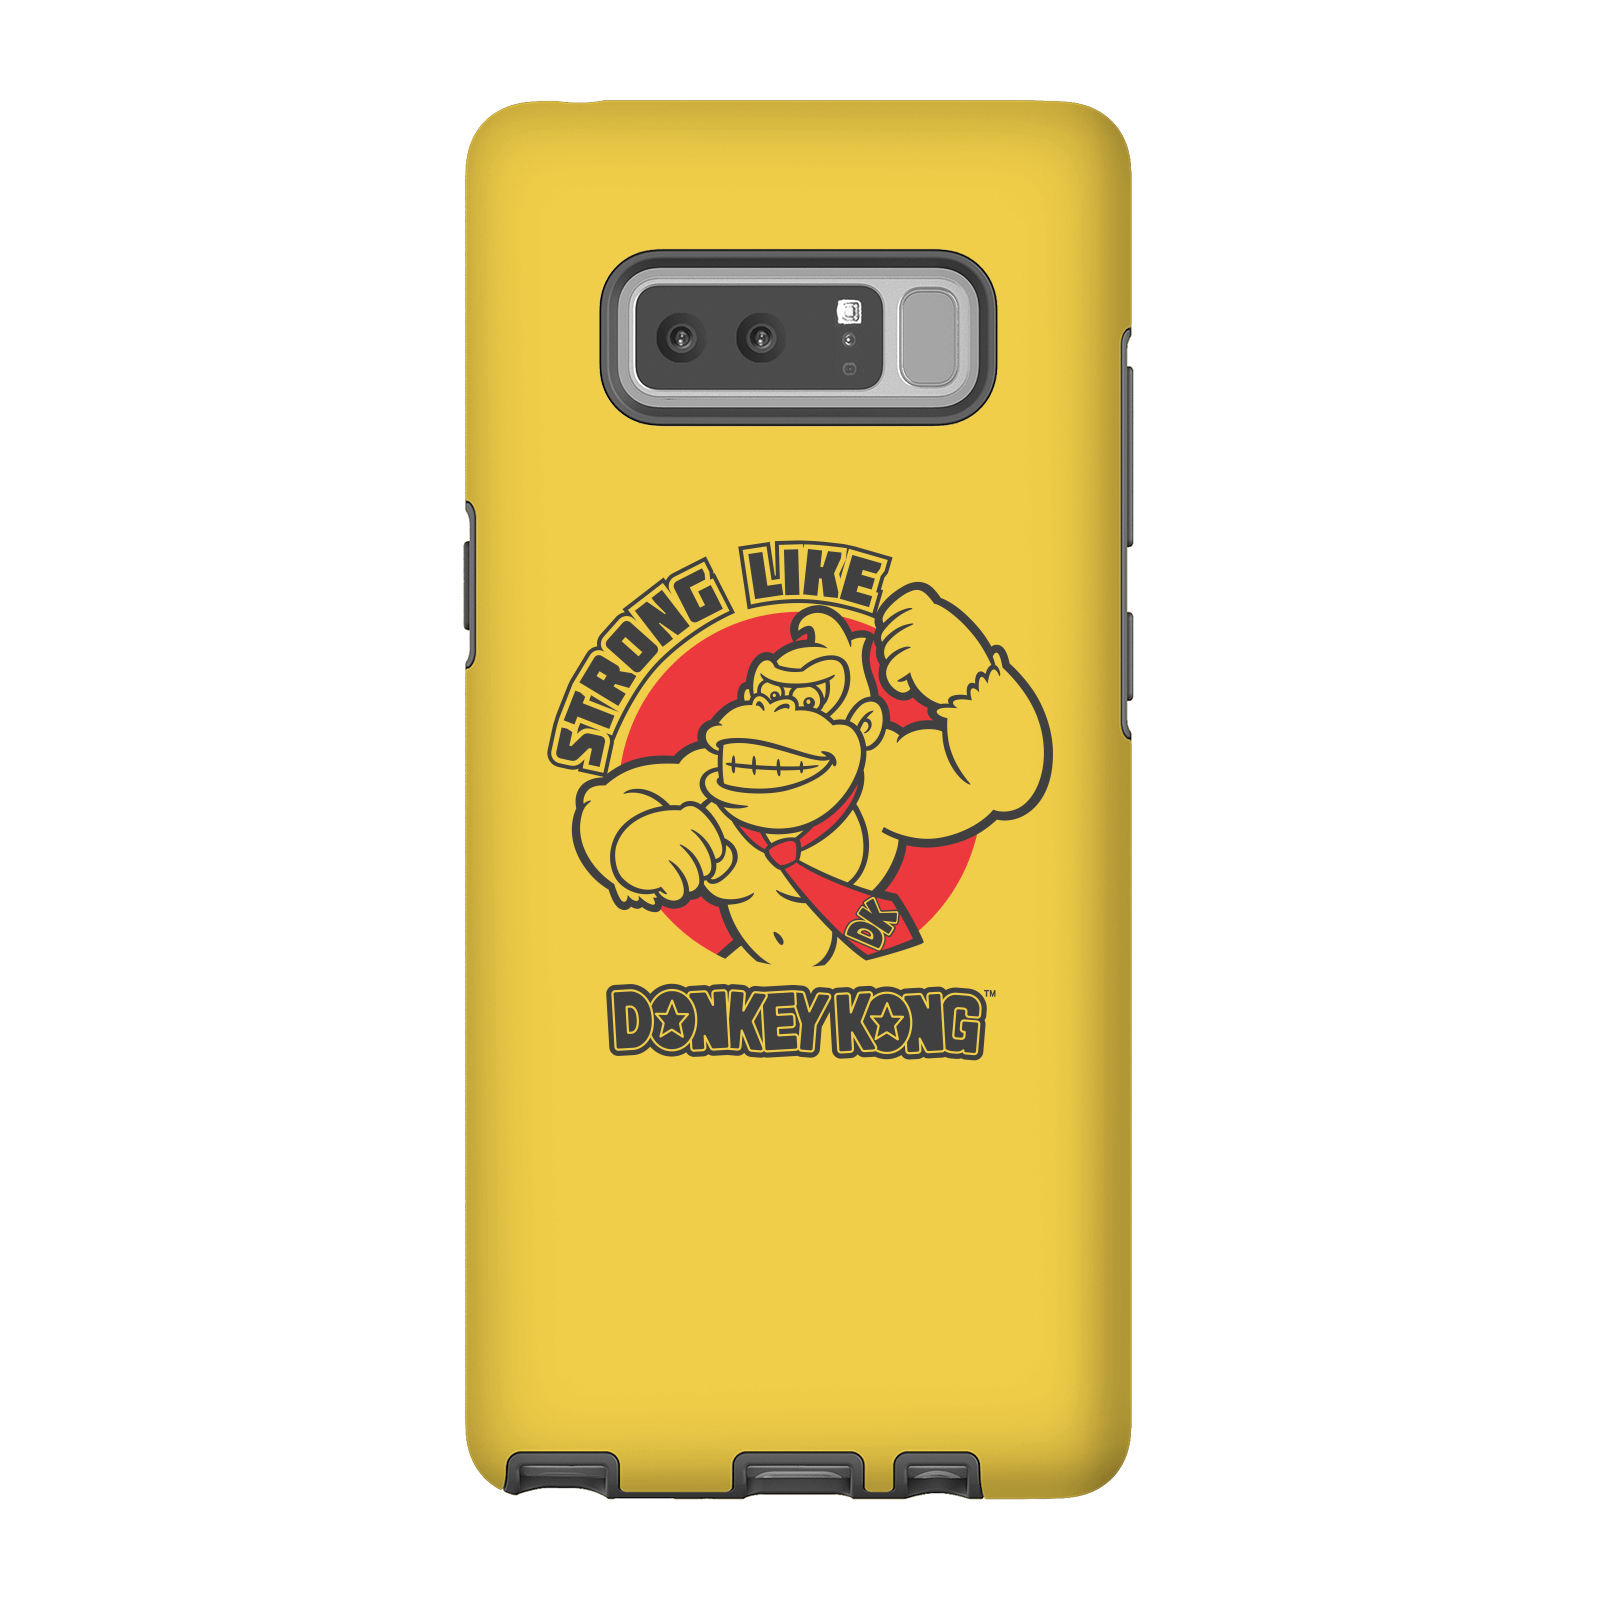 Nintendo Donkey Kong Strong Like Donkey Kong Phone Case - Samsung Note 8 - Tough Case - Gloss